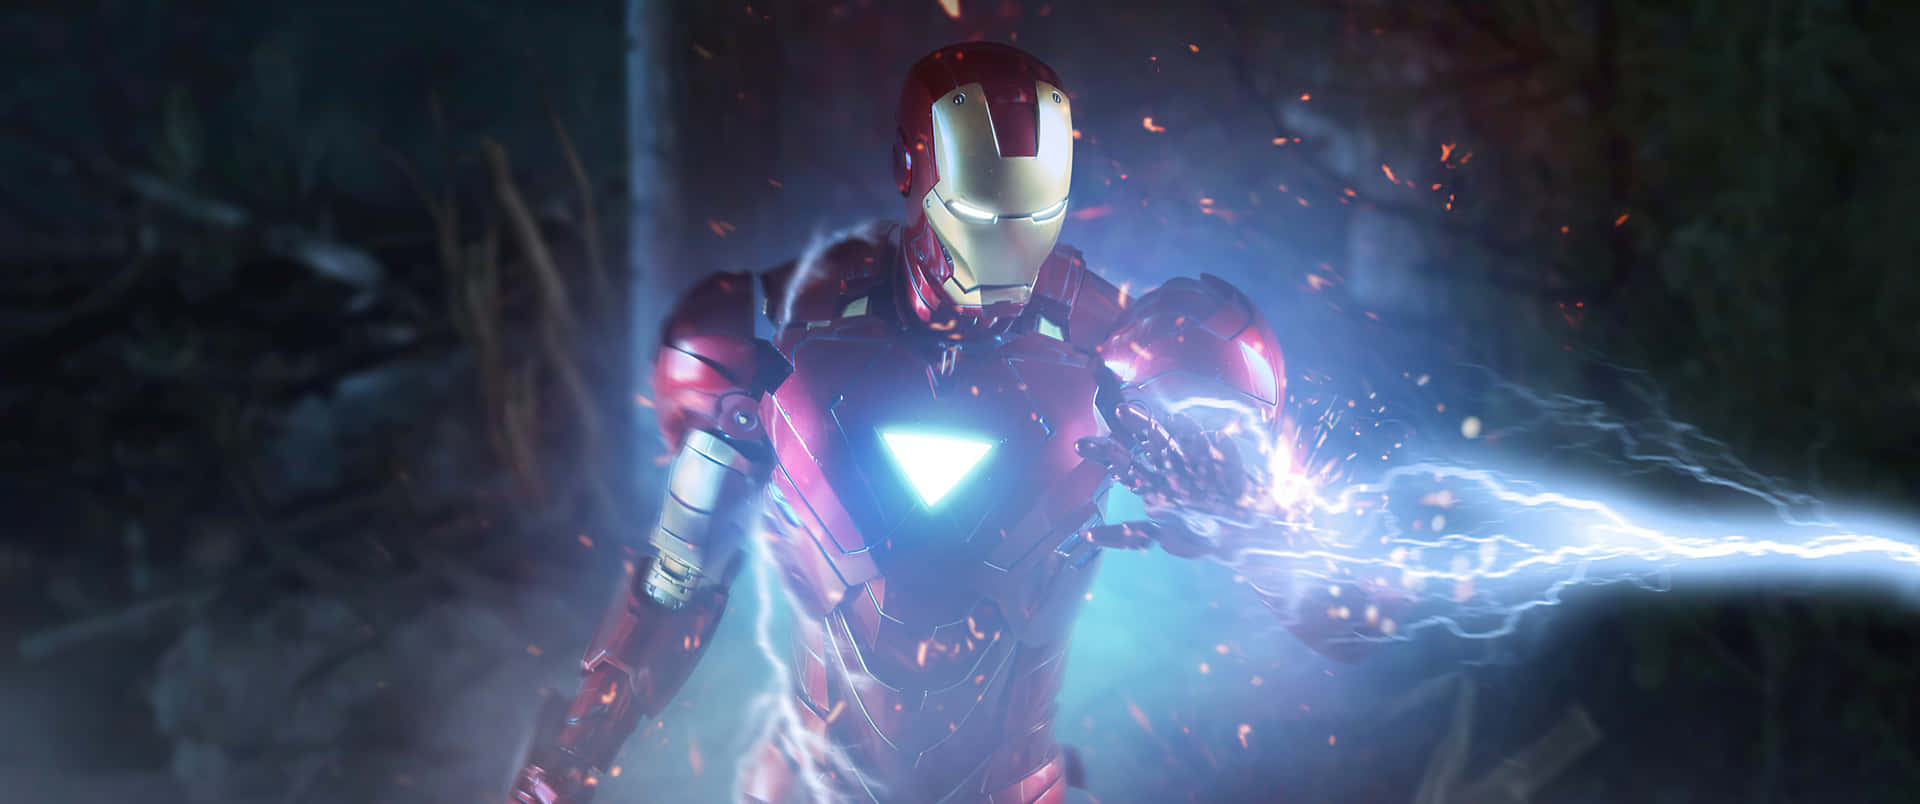 Iron Man Power Blast Super Ultra Wide Wallpaper